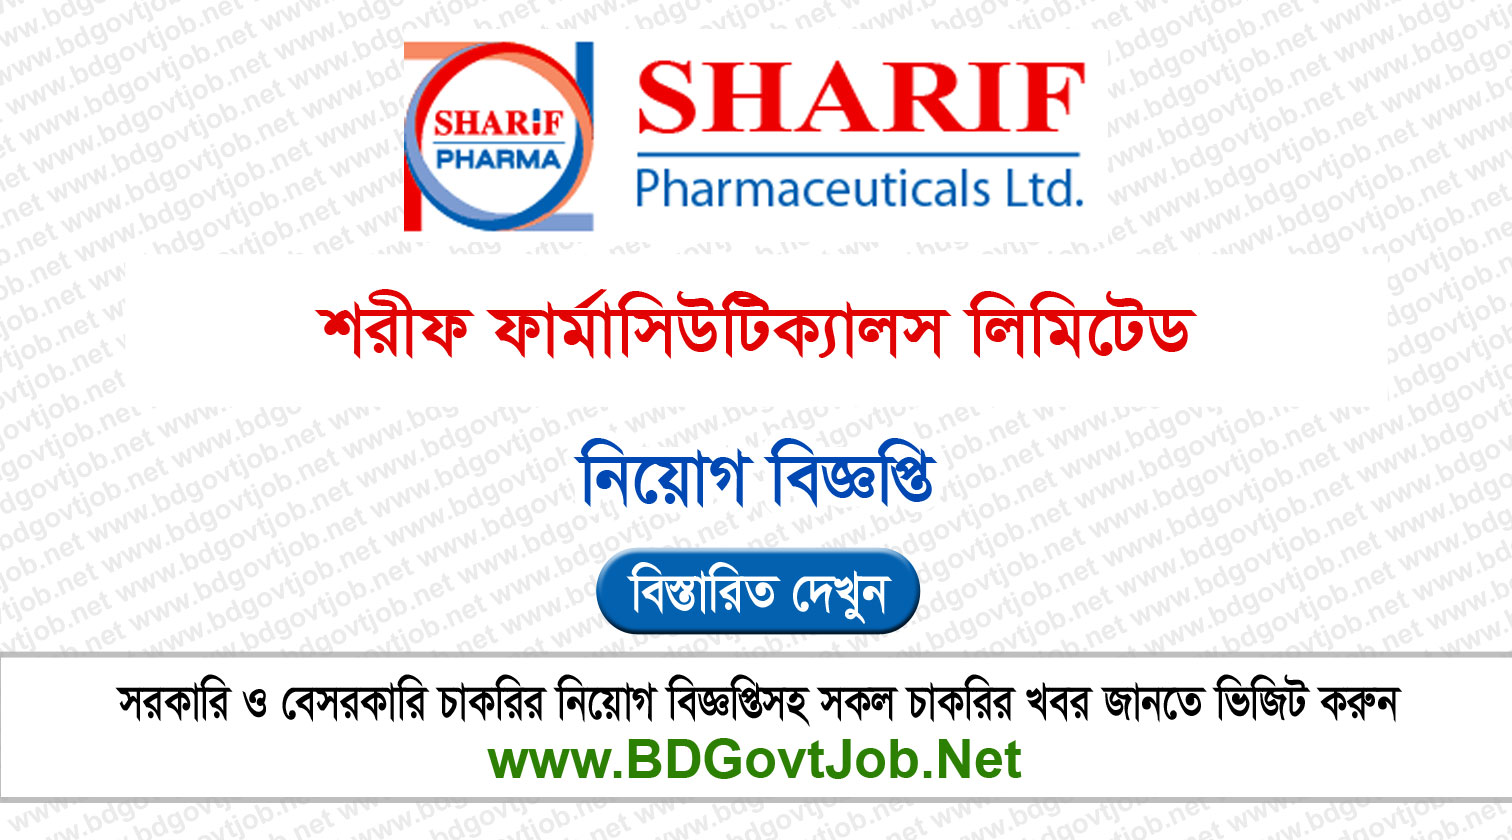 Sharif Pharmaceuticals Ltd Job Circular